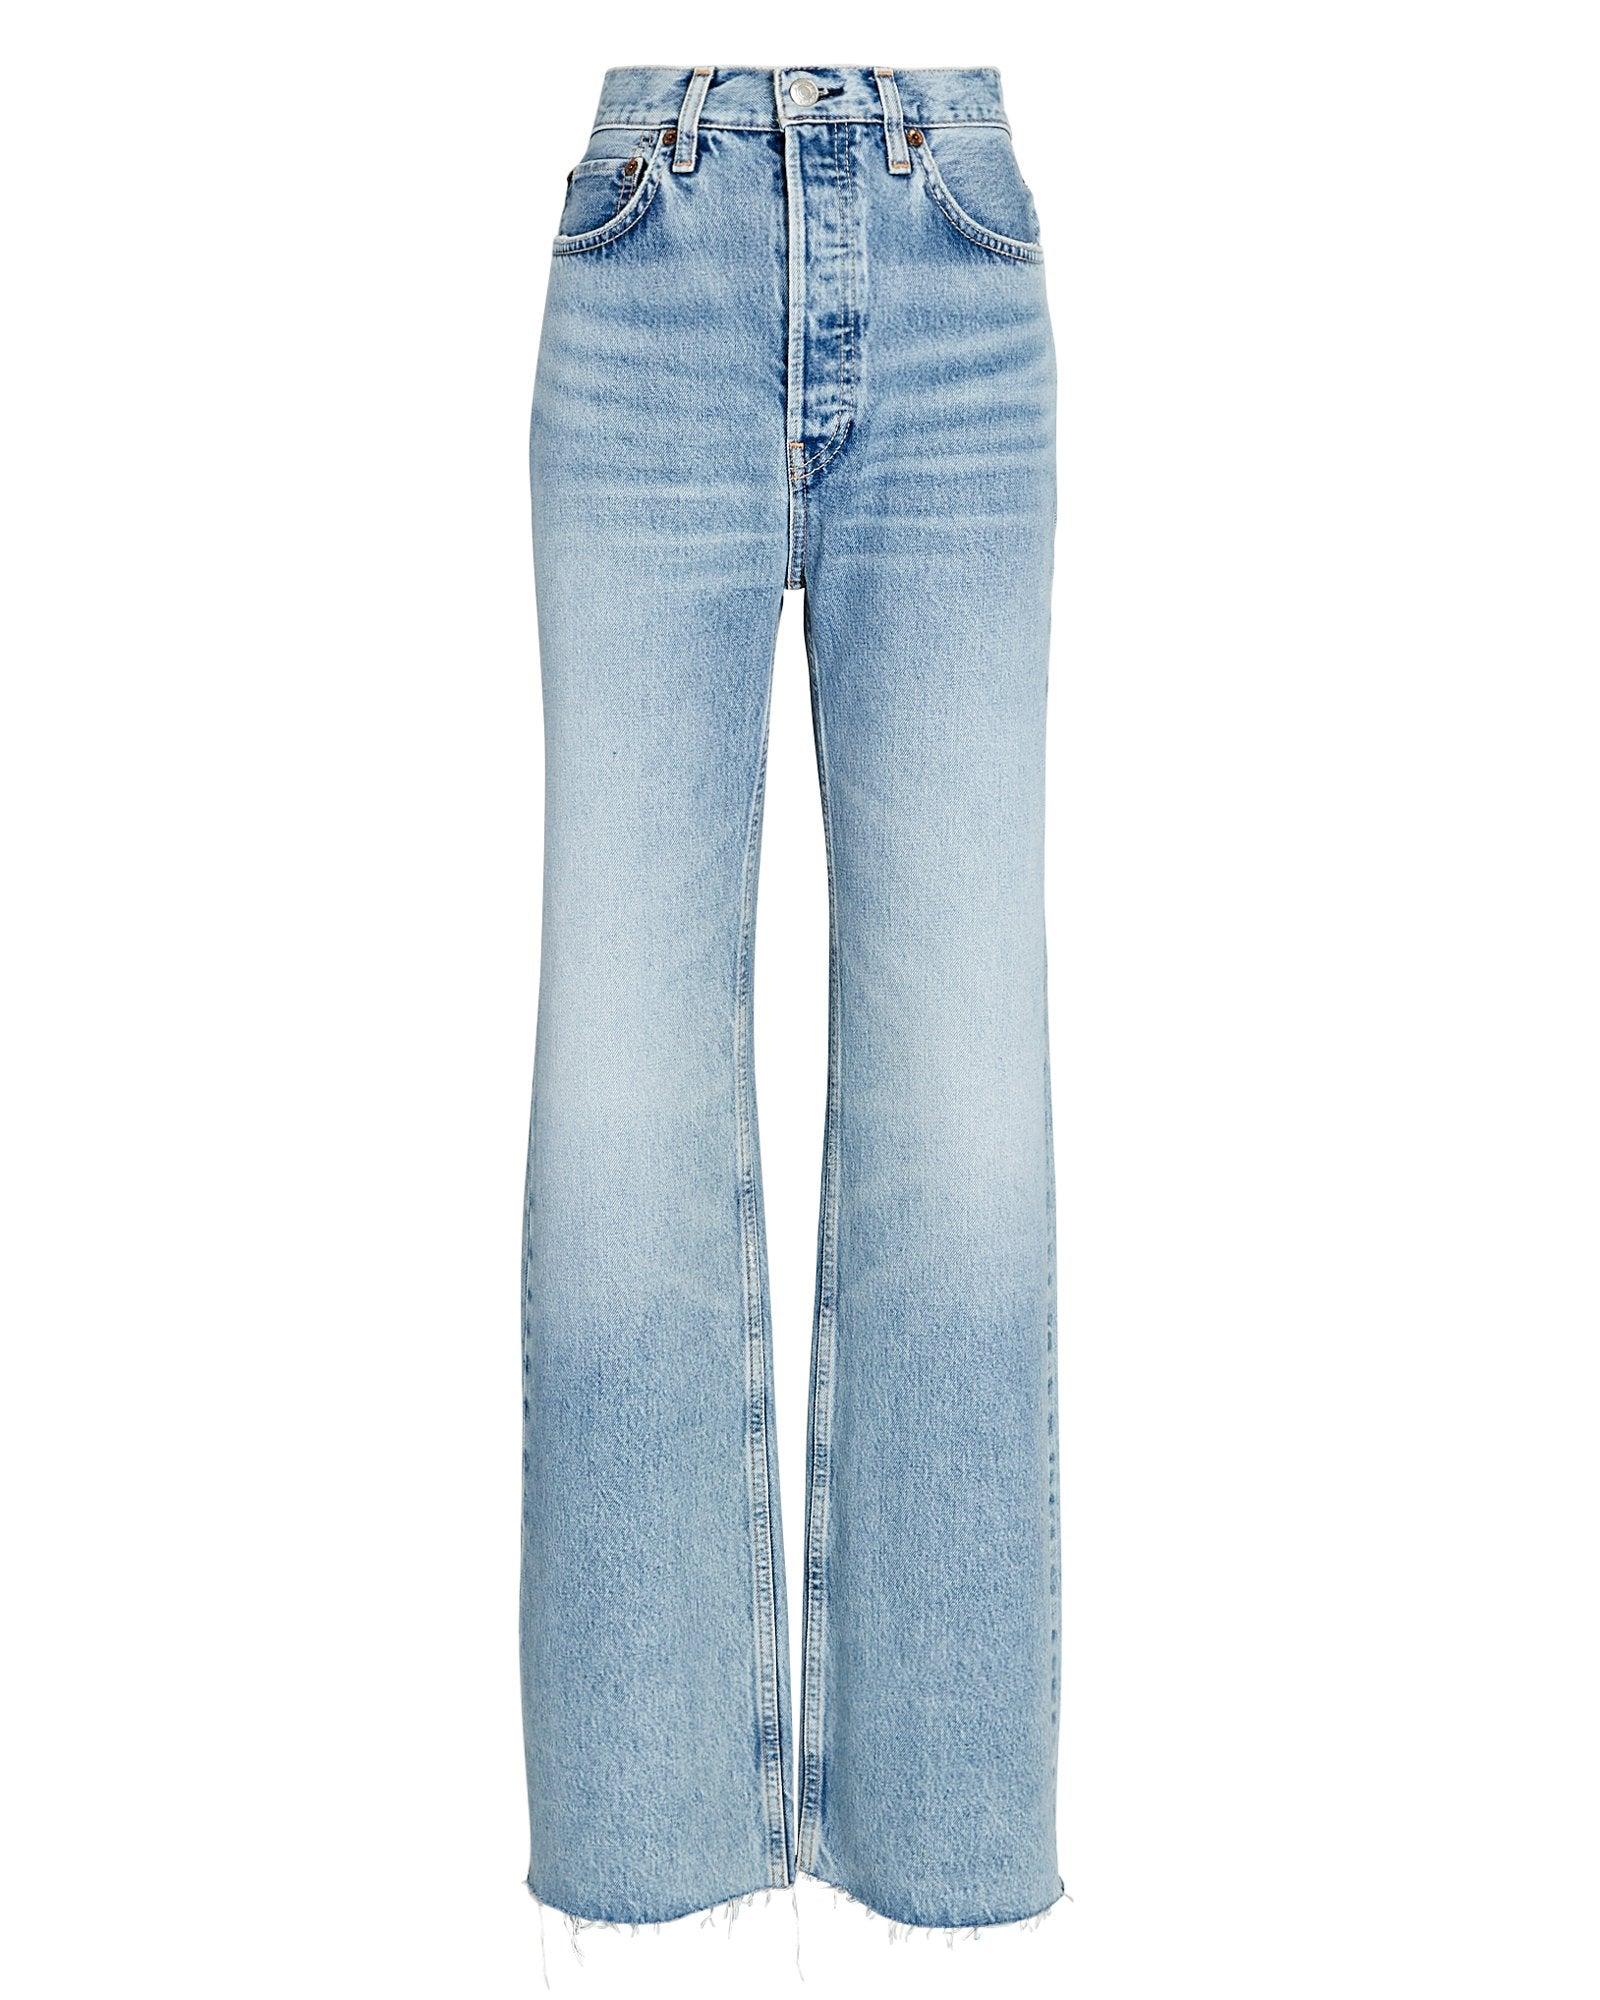 https://cdna.lystit.com/photos/shoppremiumoutlets/f0ce103e/redone-60s-fade-70s-Ultra-High-rise-Wide-leg-Jeans.jpeg